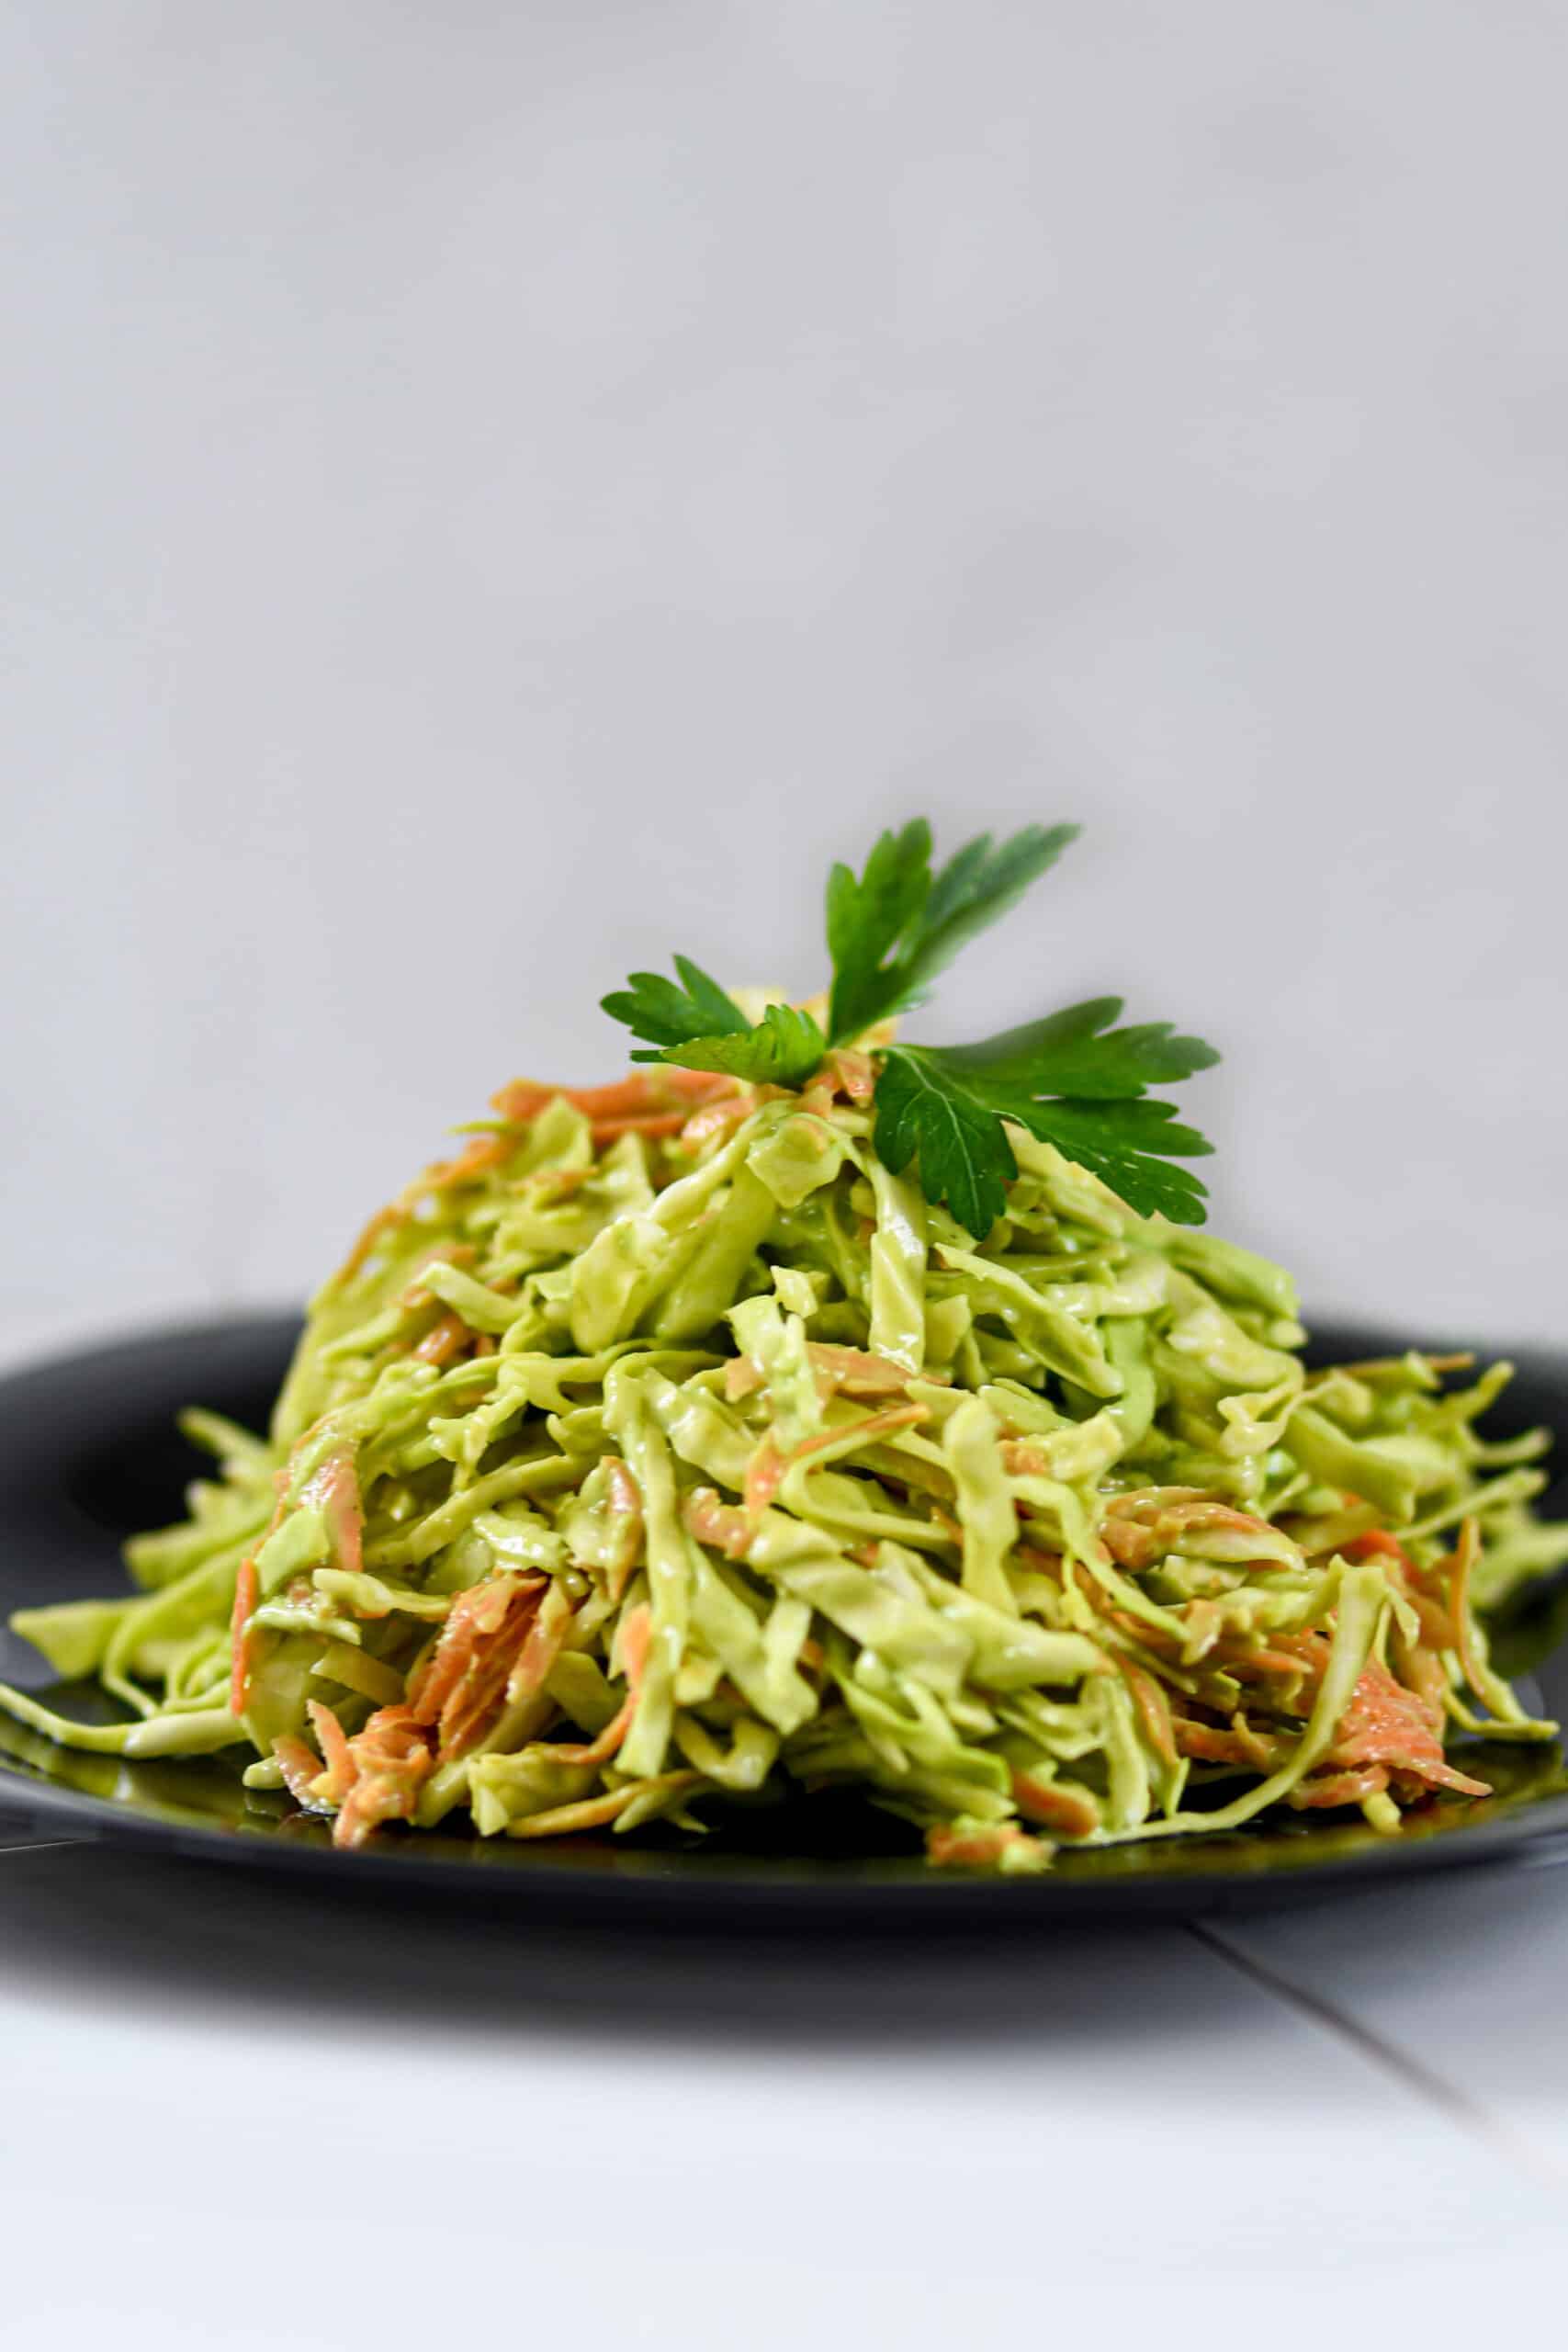 vitamin C raw cabbage salad rich in fiber